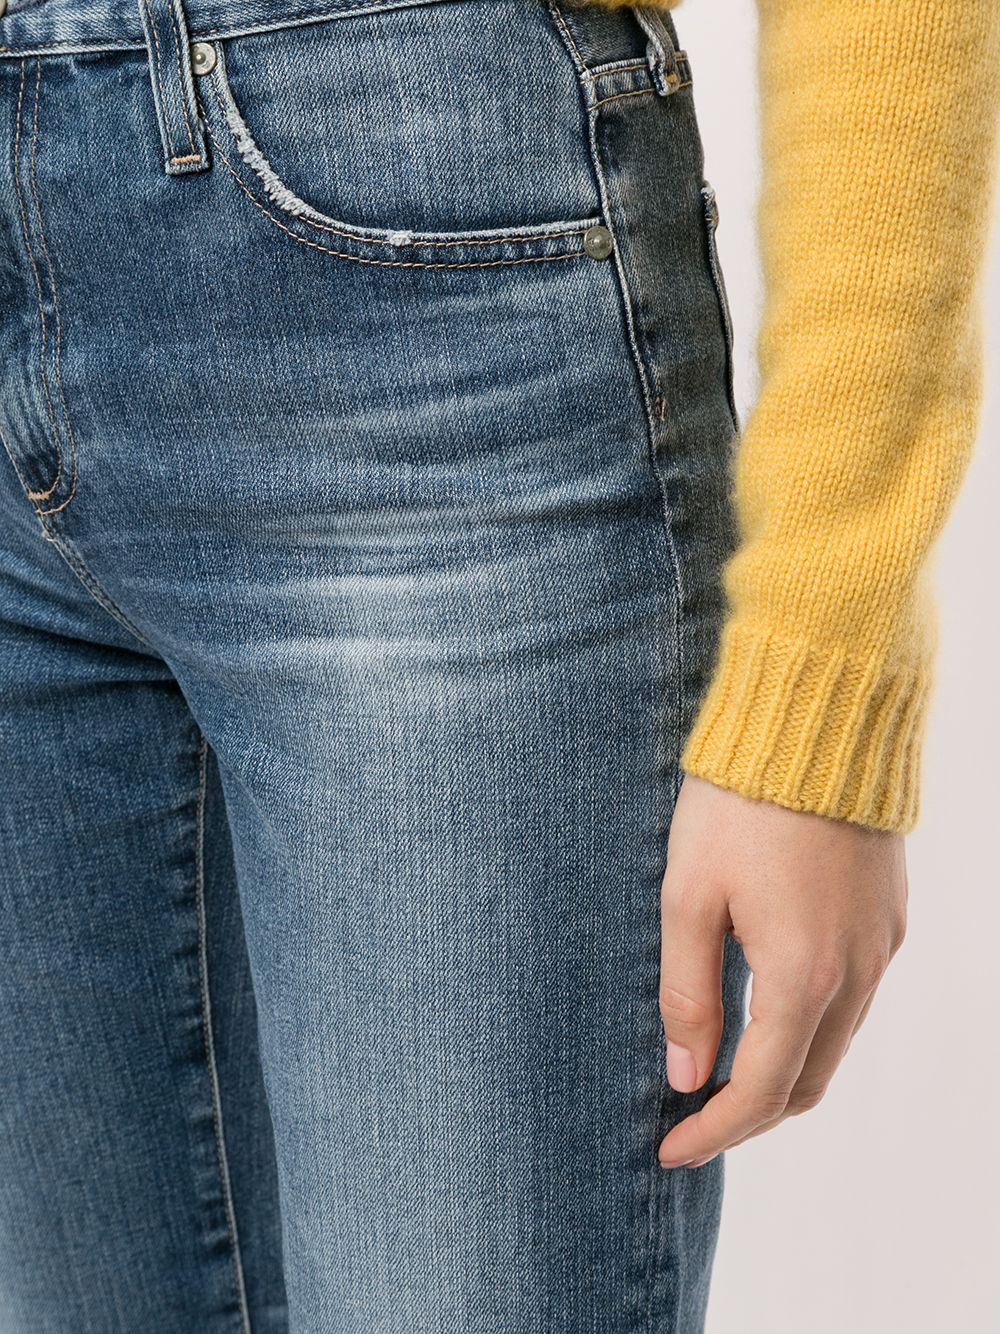 фото Ag jeans джинсы прямого кроя